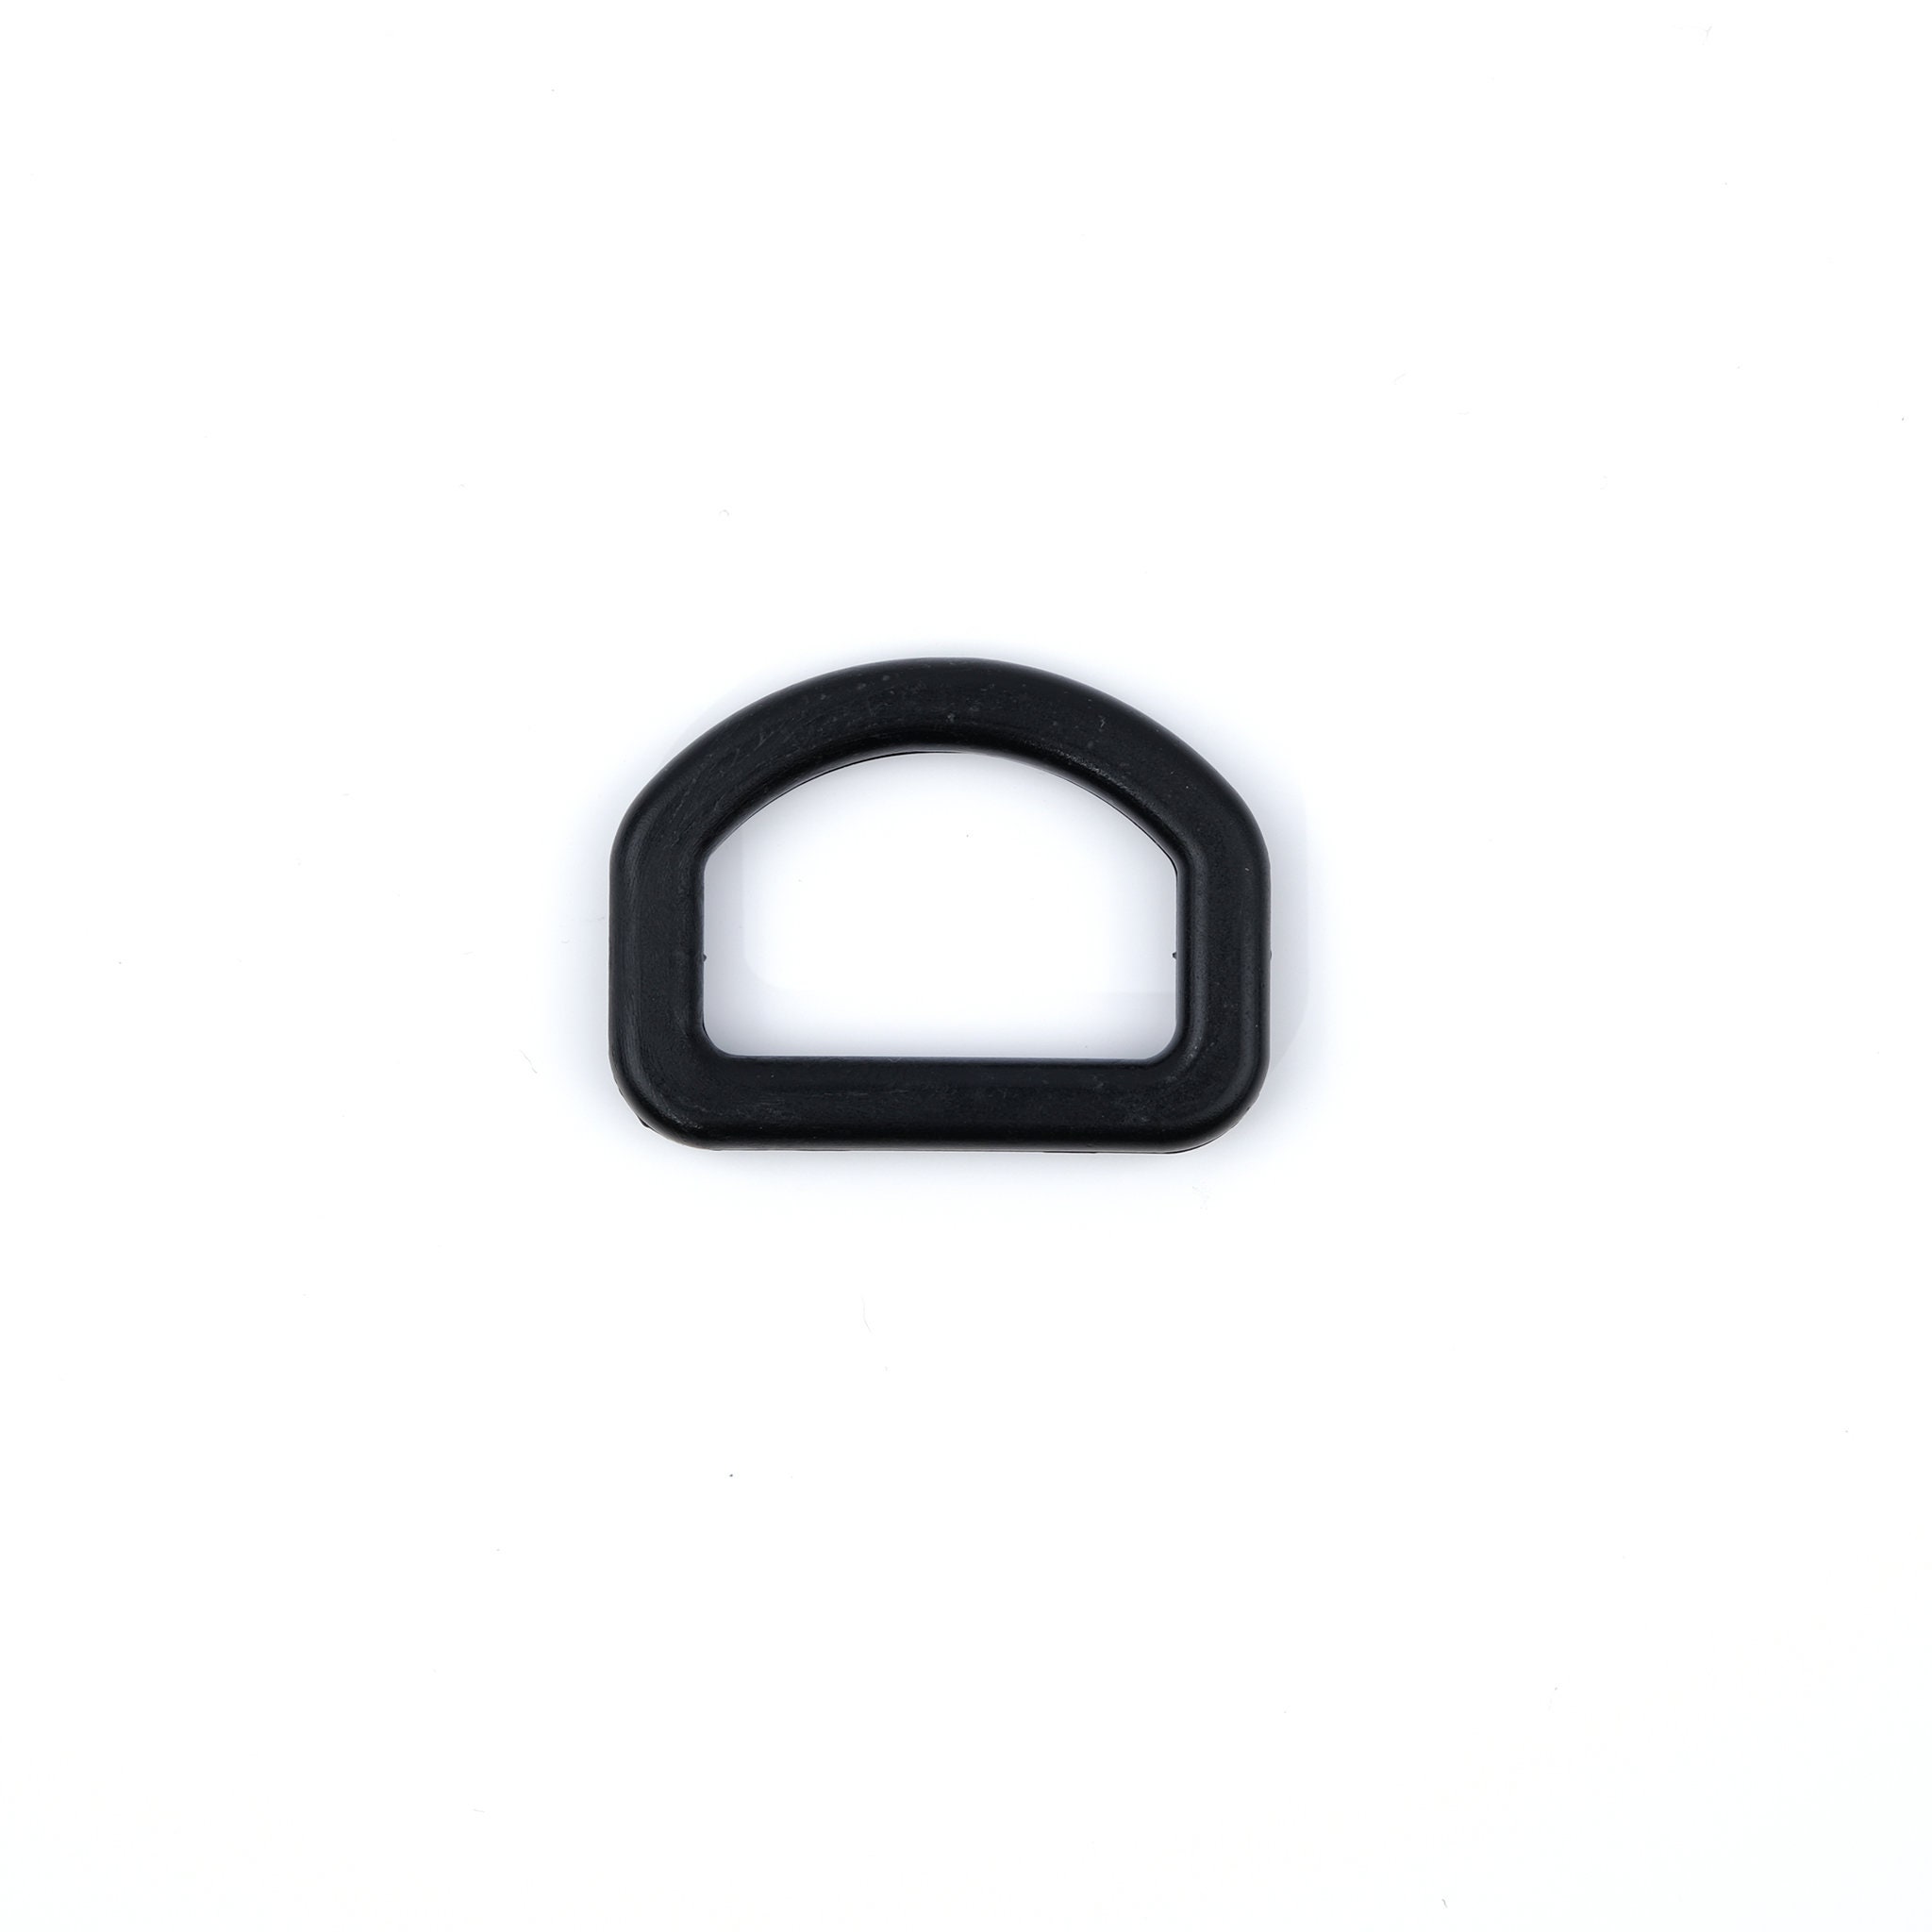 Buy 1 1/2 Inch Black Plastic D-Rings Online